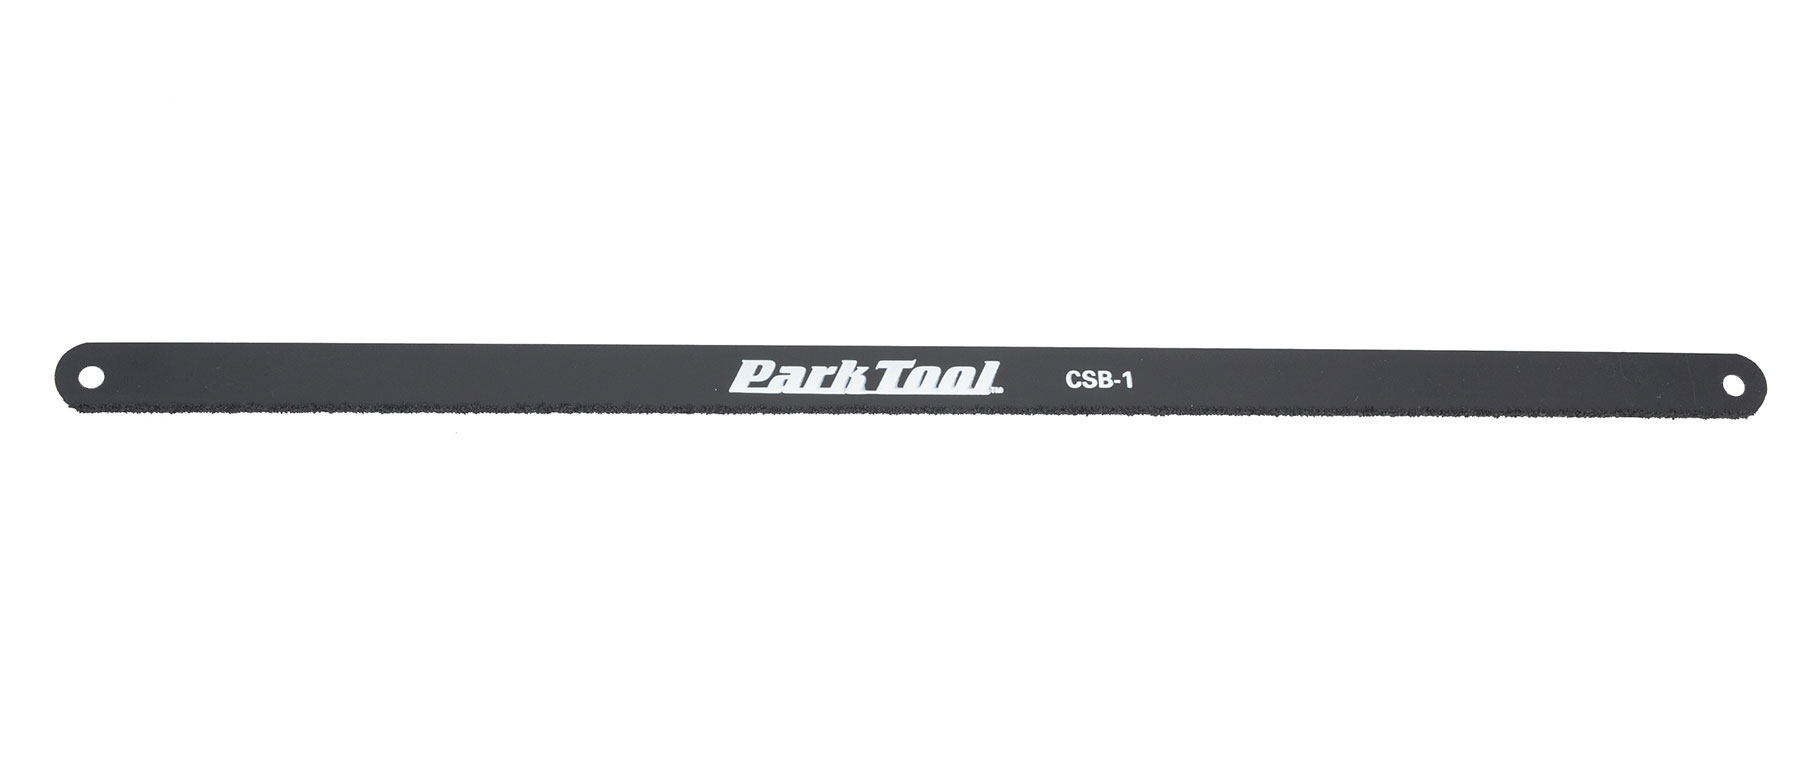 Park Tool CSB-1 Carbon Cutting Saw Blade